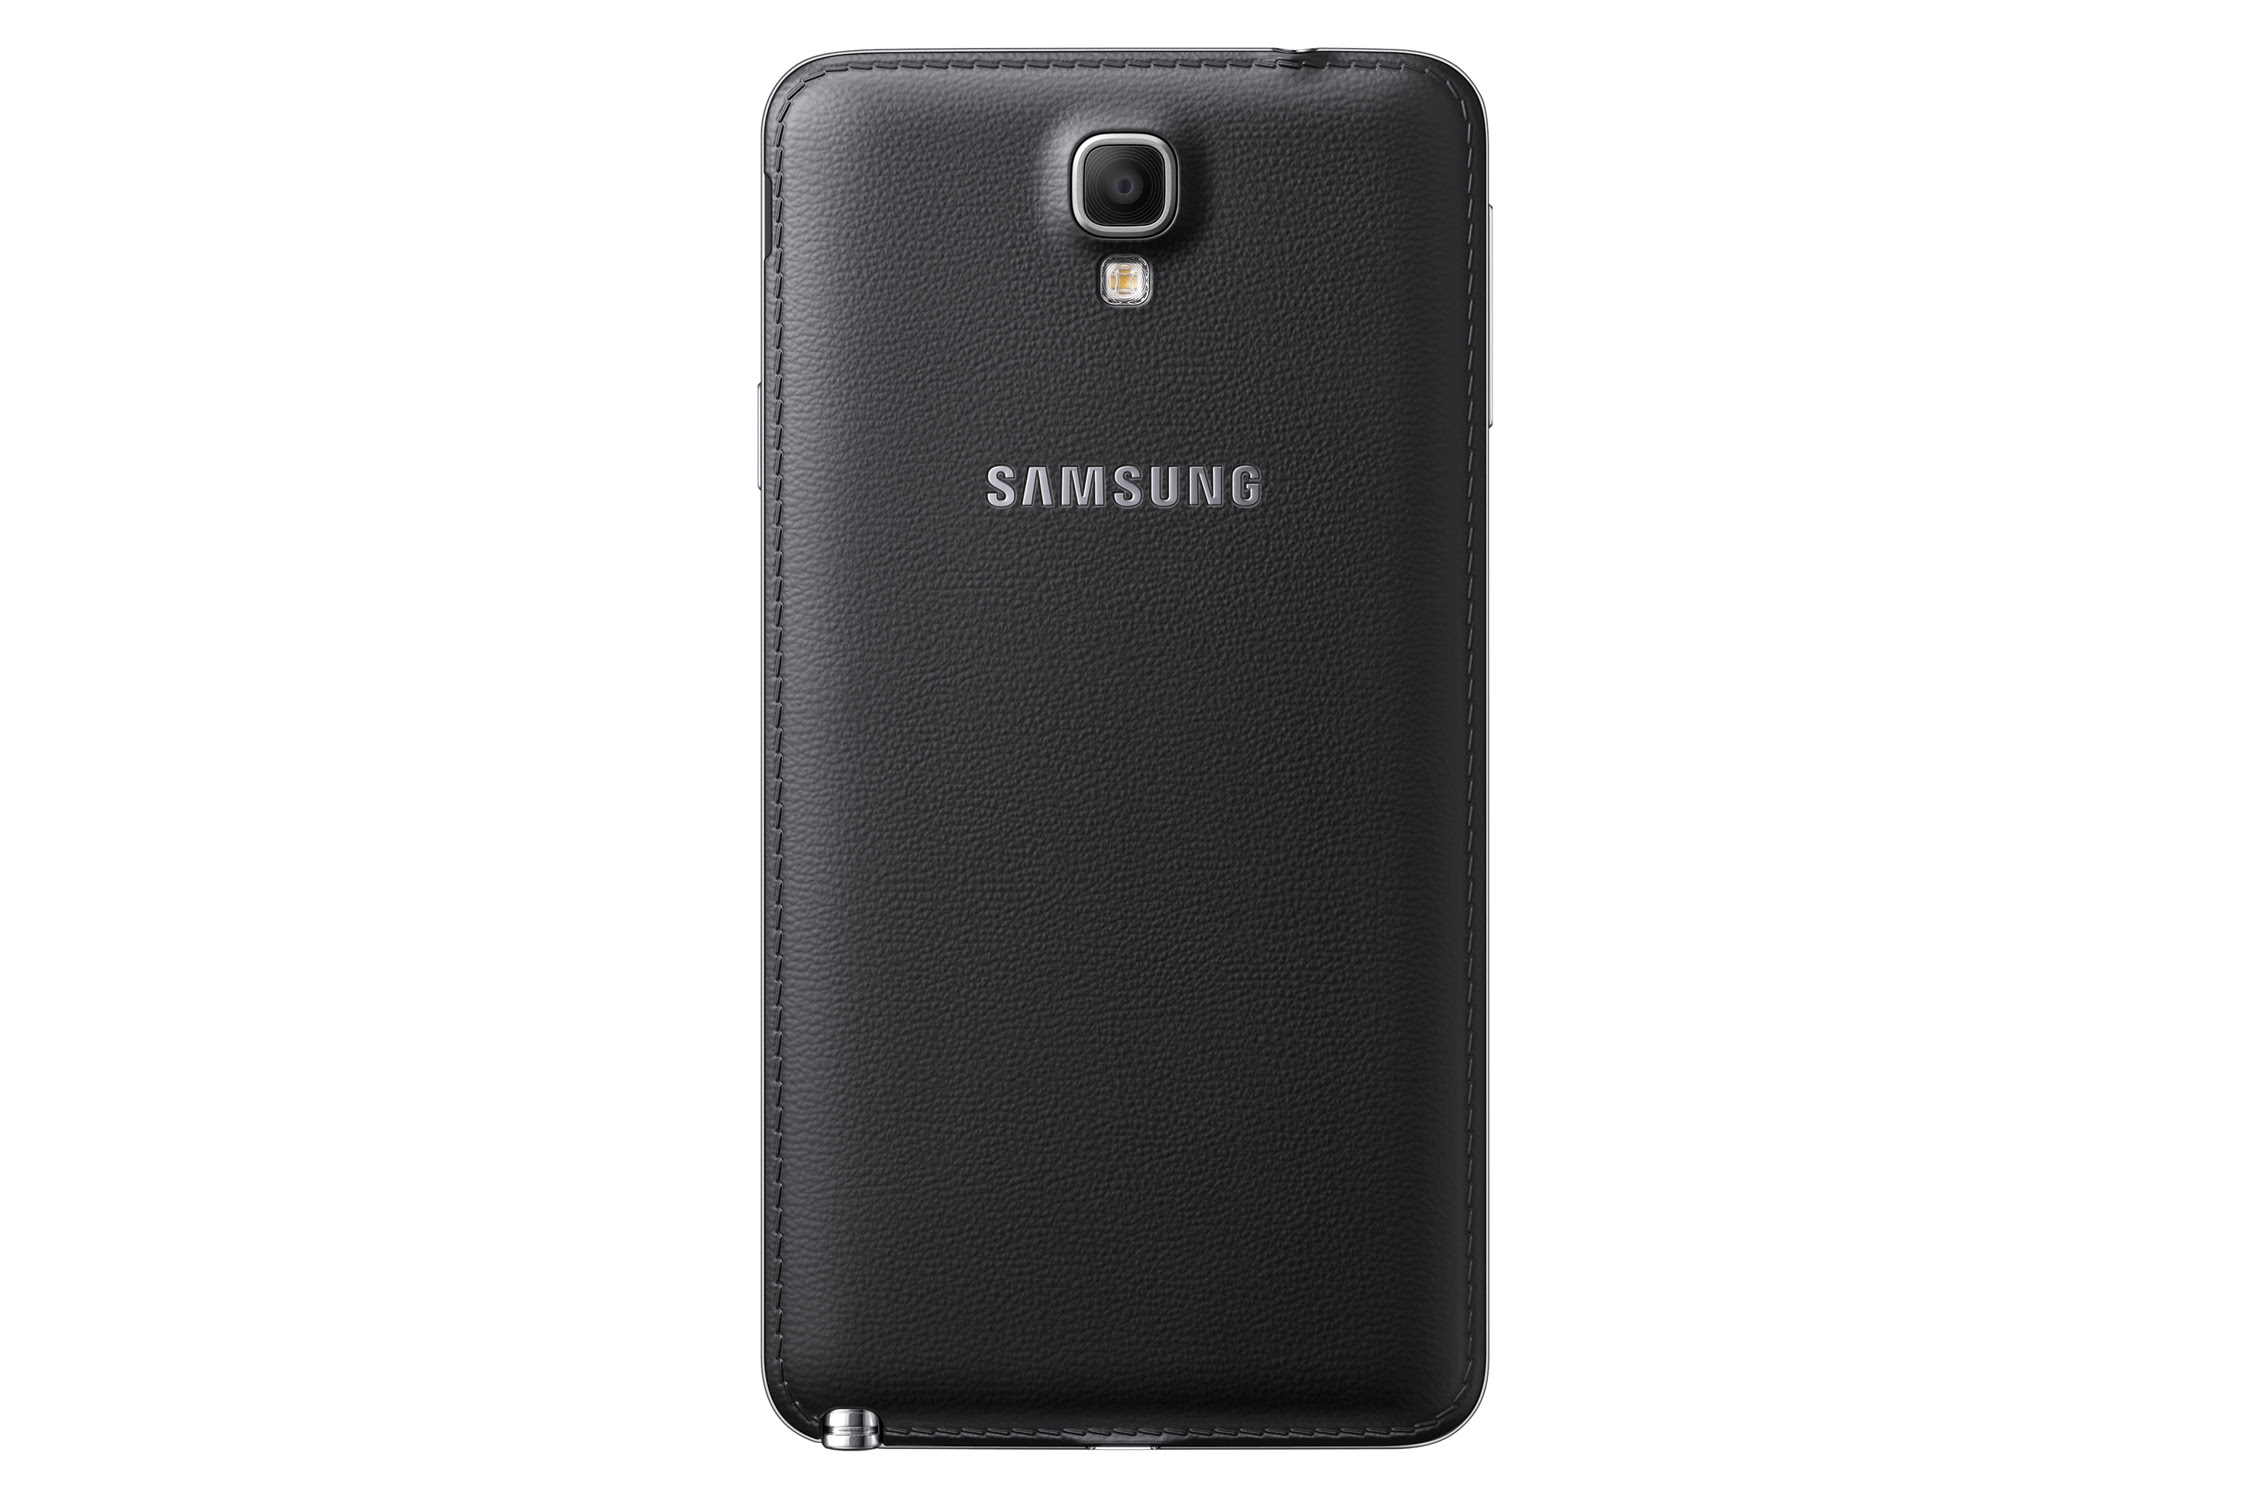 Samsung GALAXY Note 3 Neo 5